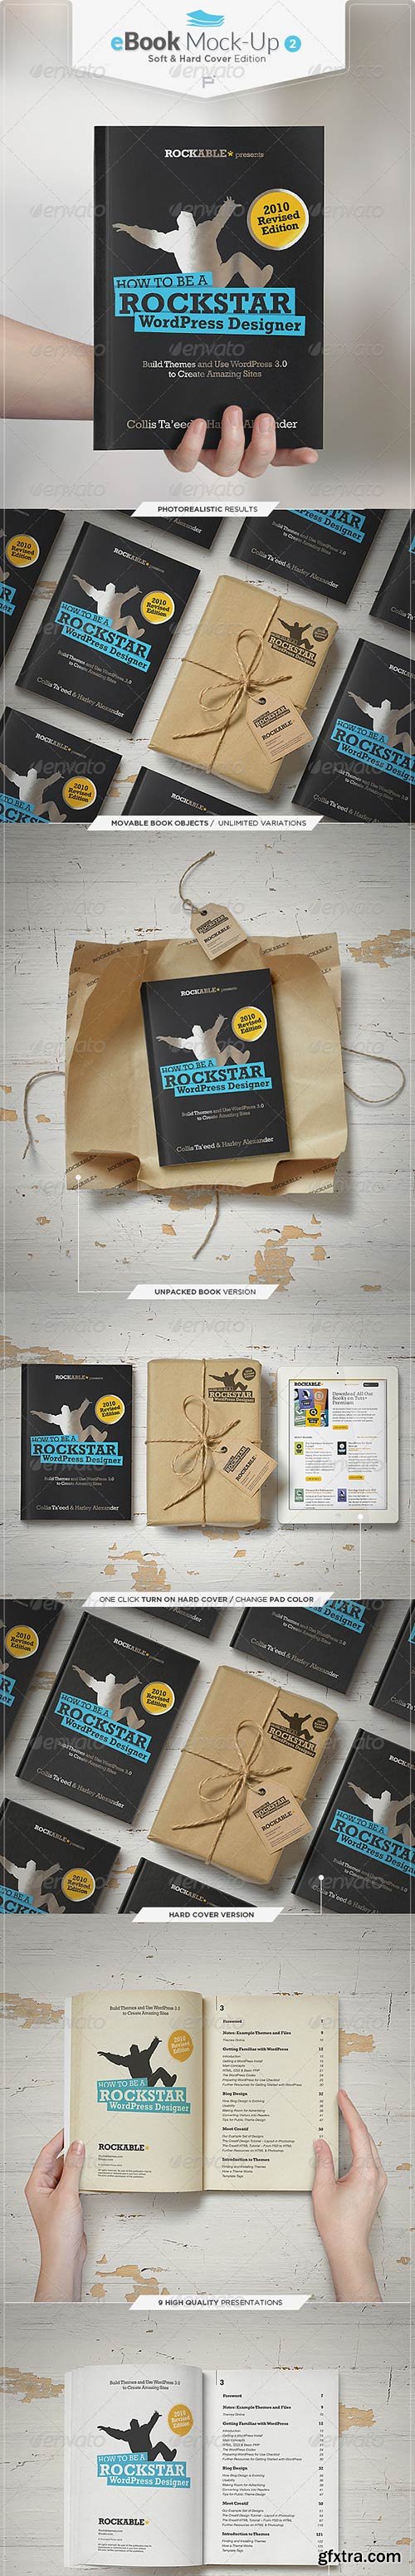 GraphicRiver - eBook Mock-Up Set 2 / Soft & Hard Cover Edition 6887101